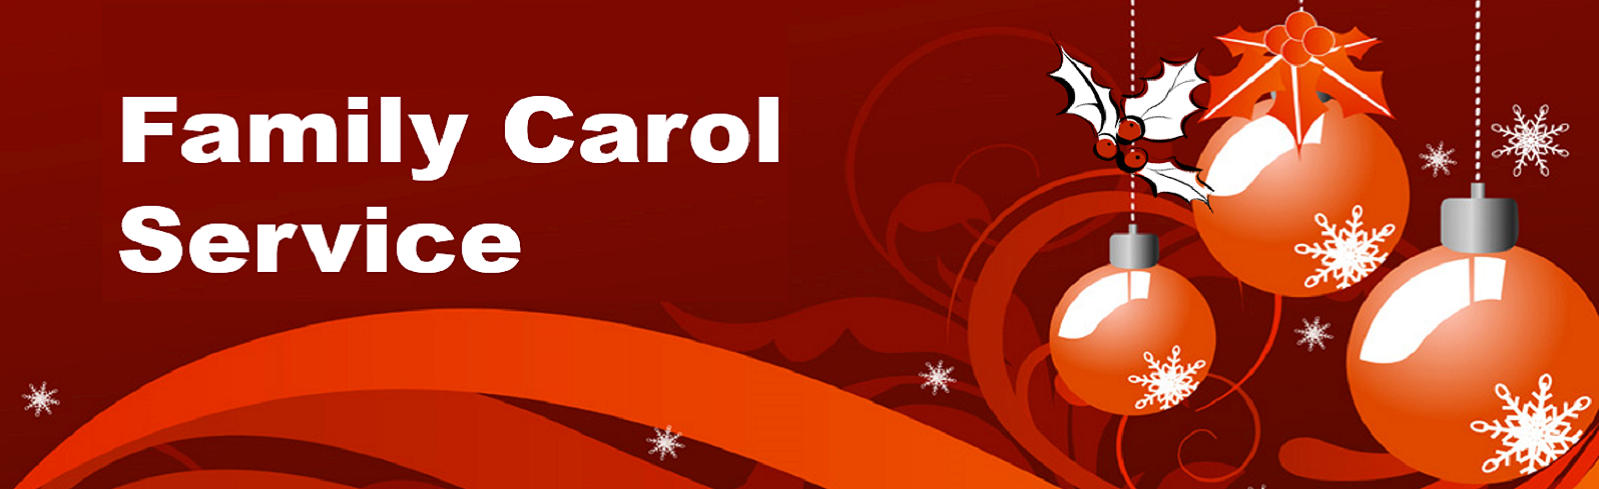 Carol-Service